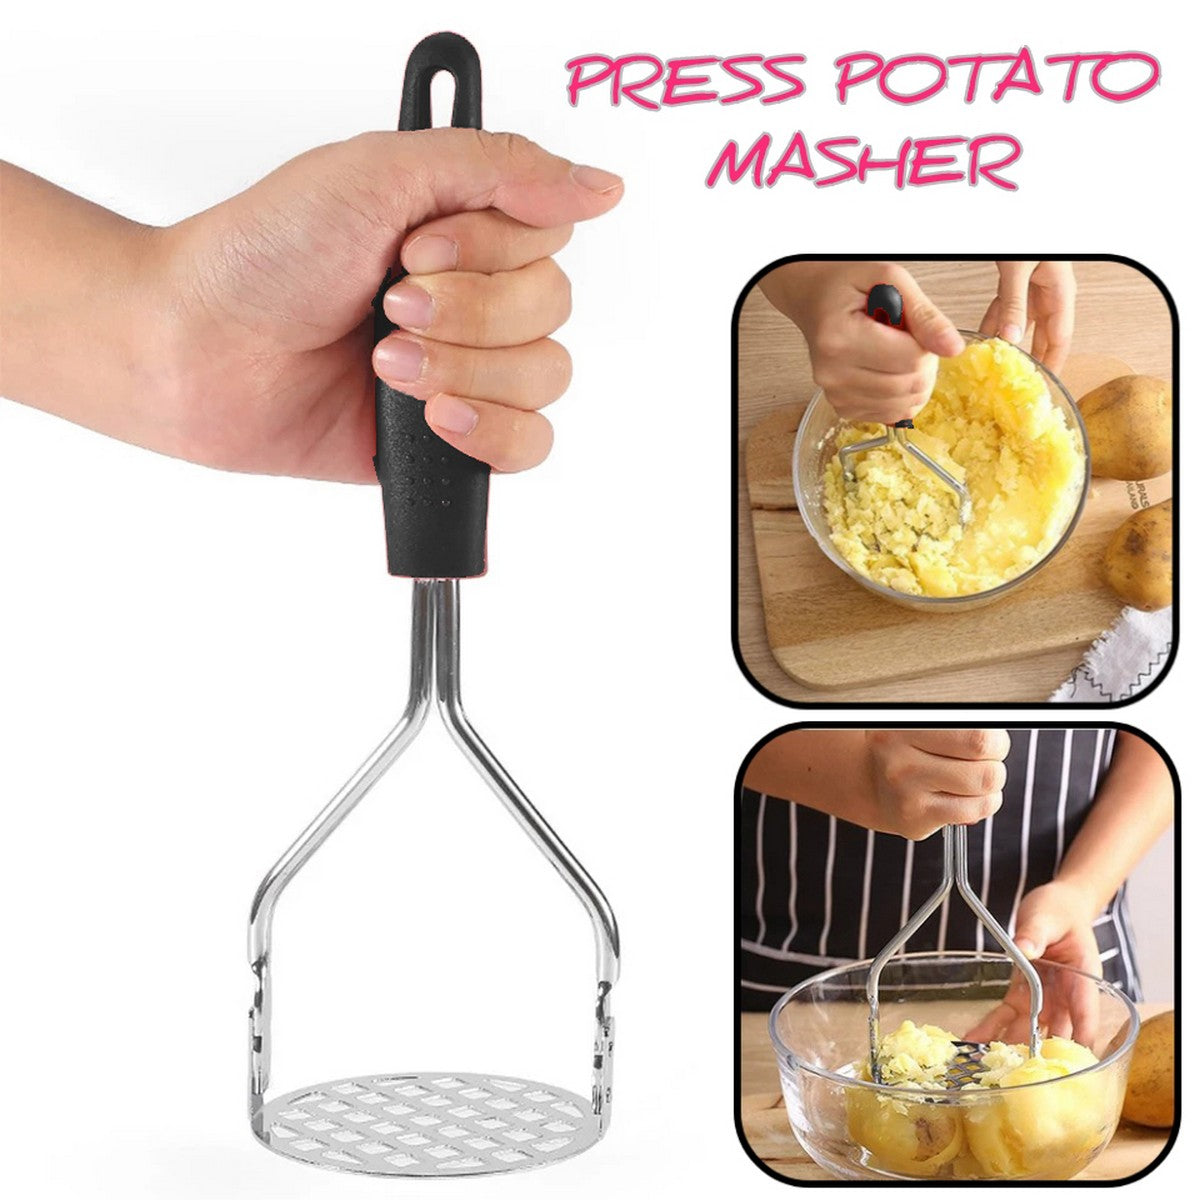 Crusher Potato Press Masher For Smooth Mashed Potatoes